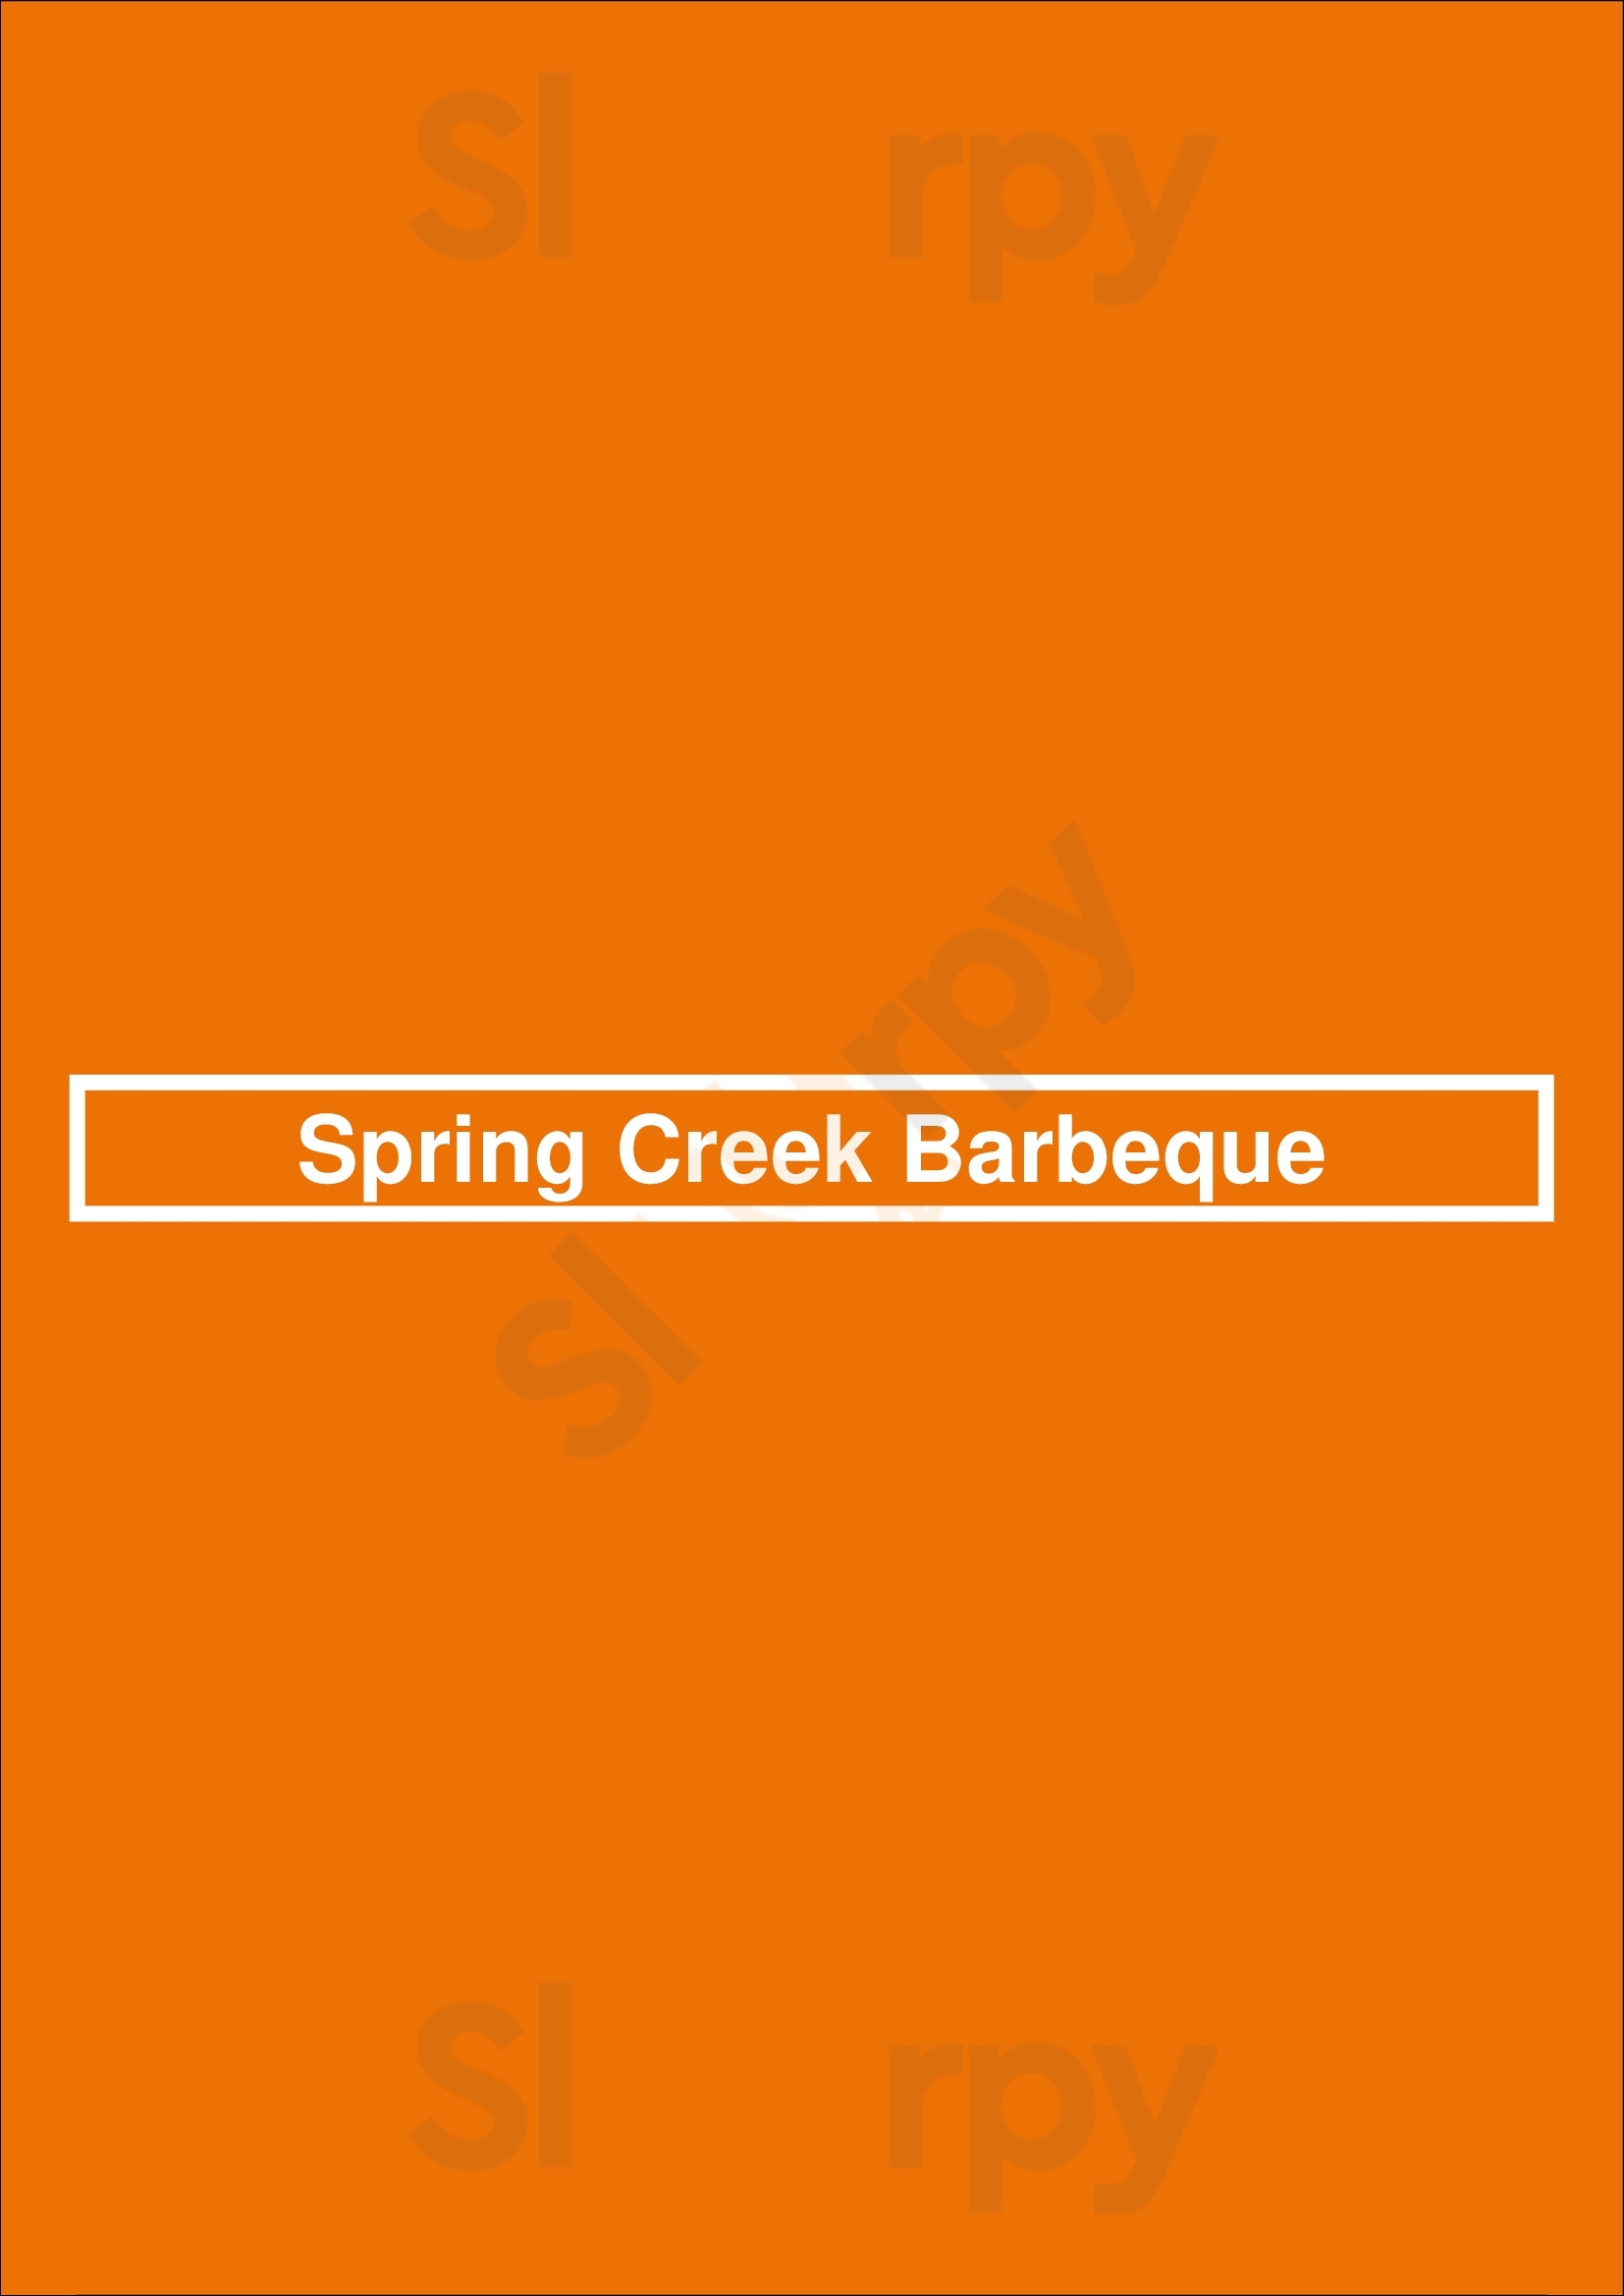 Spring Creek Barbeque Bedford Menu - 1